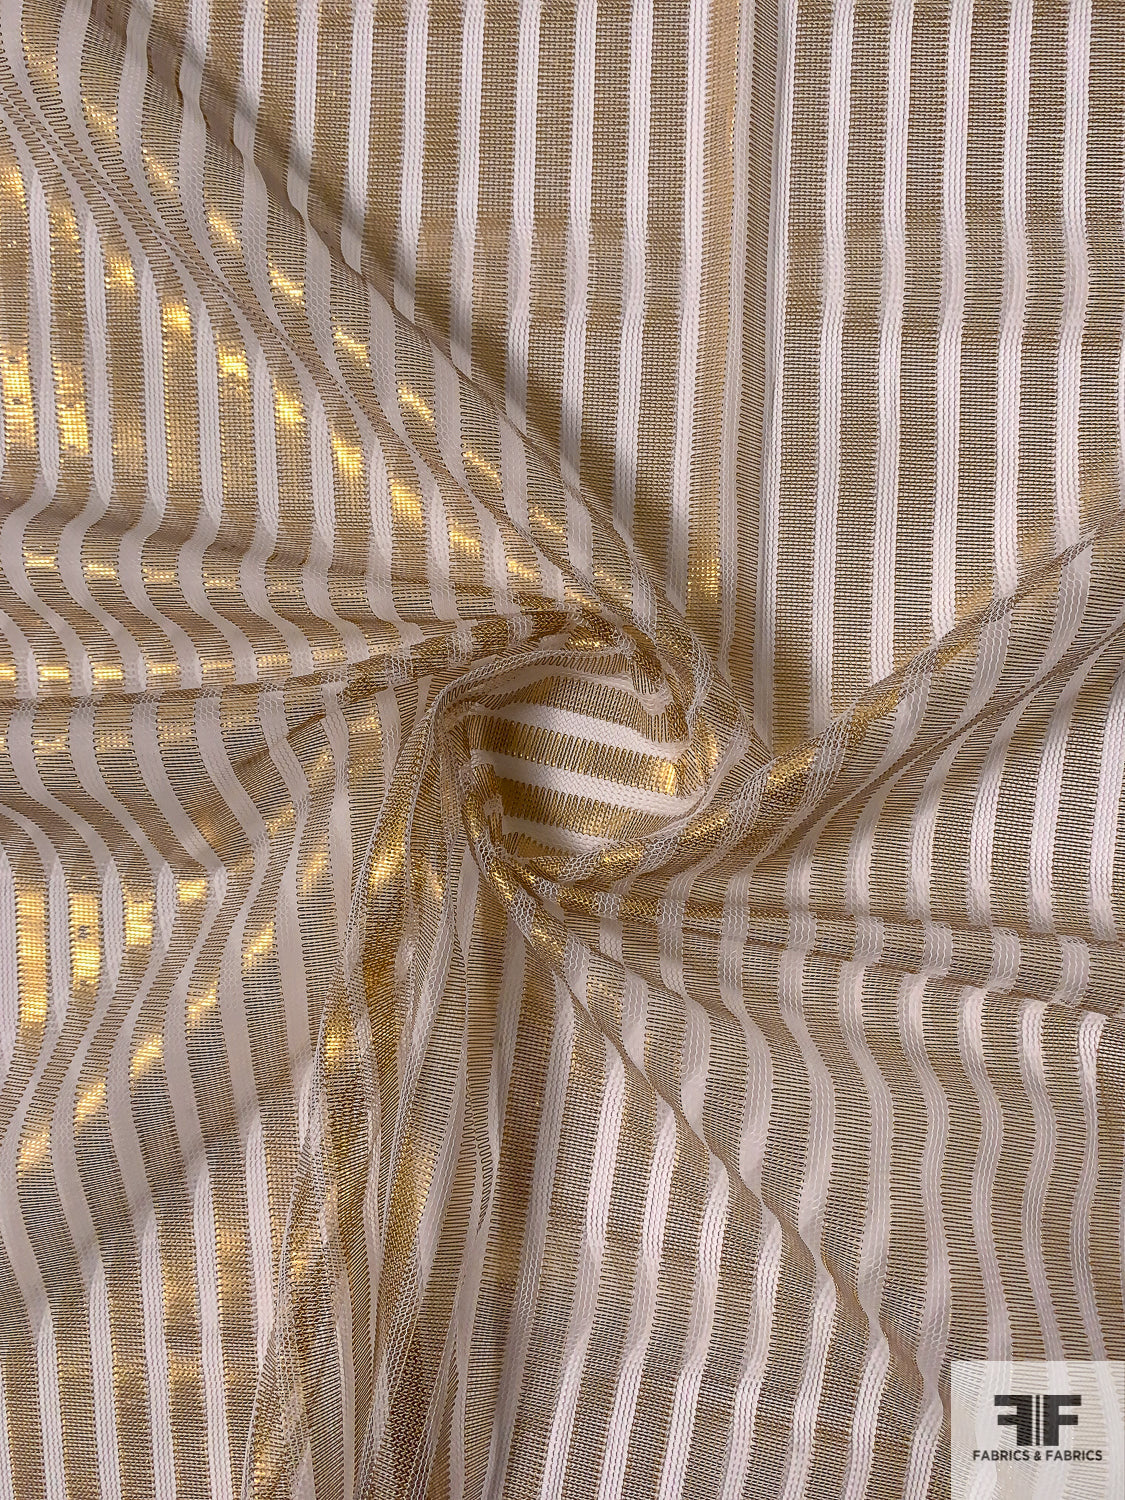 Vertical Metallic Striped Tulle - Gold / White